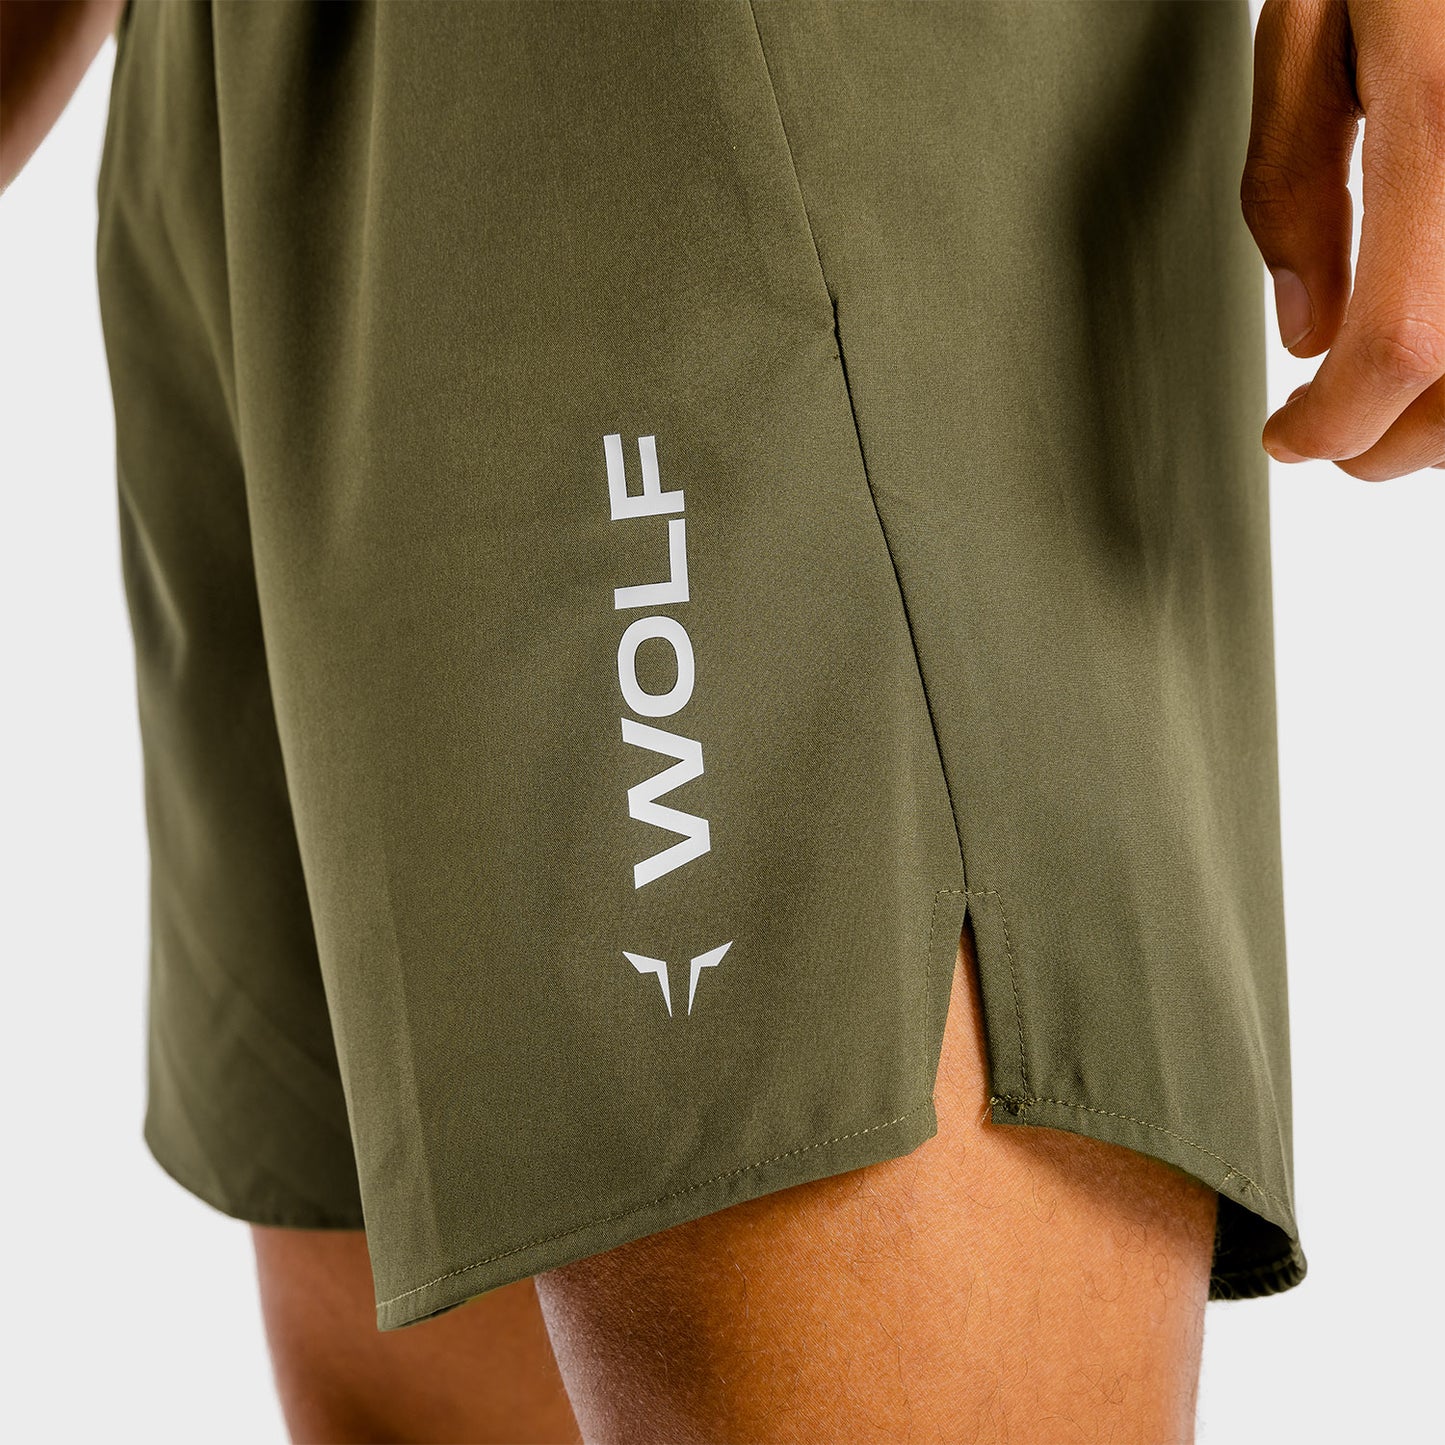 squatwolf-short-for-men-primal-shorts-workout-khaki-gym-wear